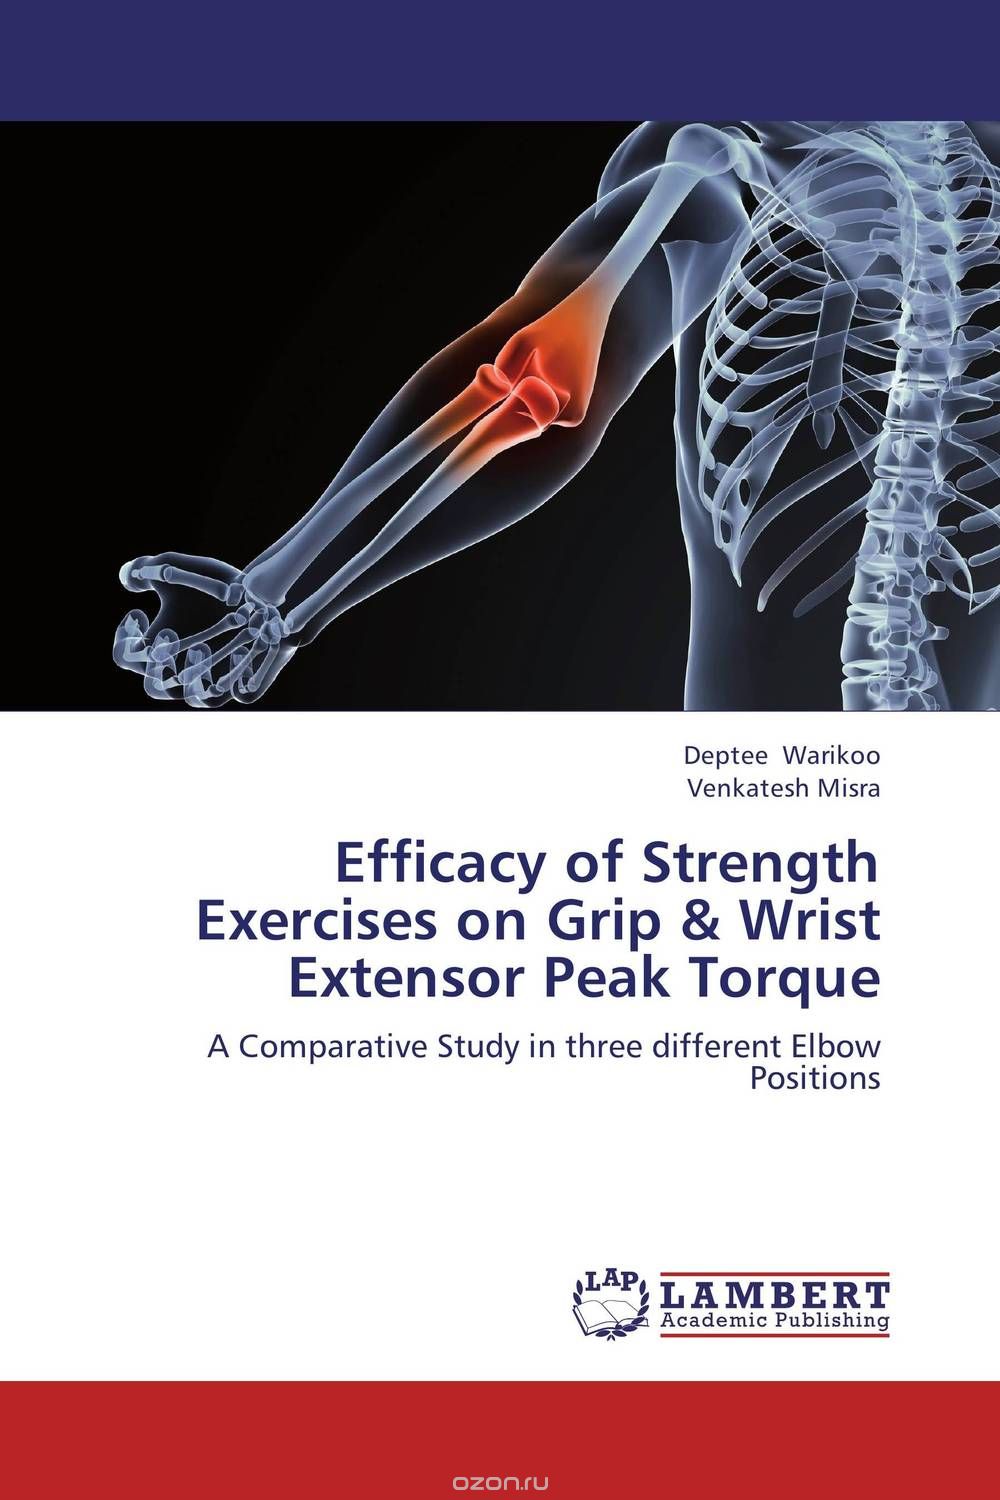 Скачать книгу "Efficacy of Strength Exercises on Grip & Wrist Extensor Peak Torque"